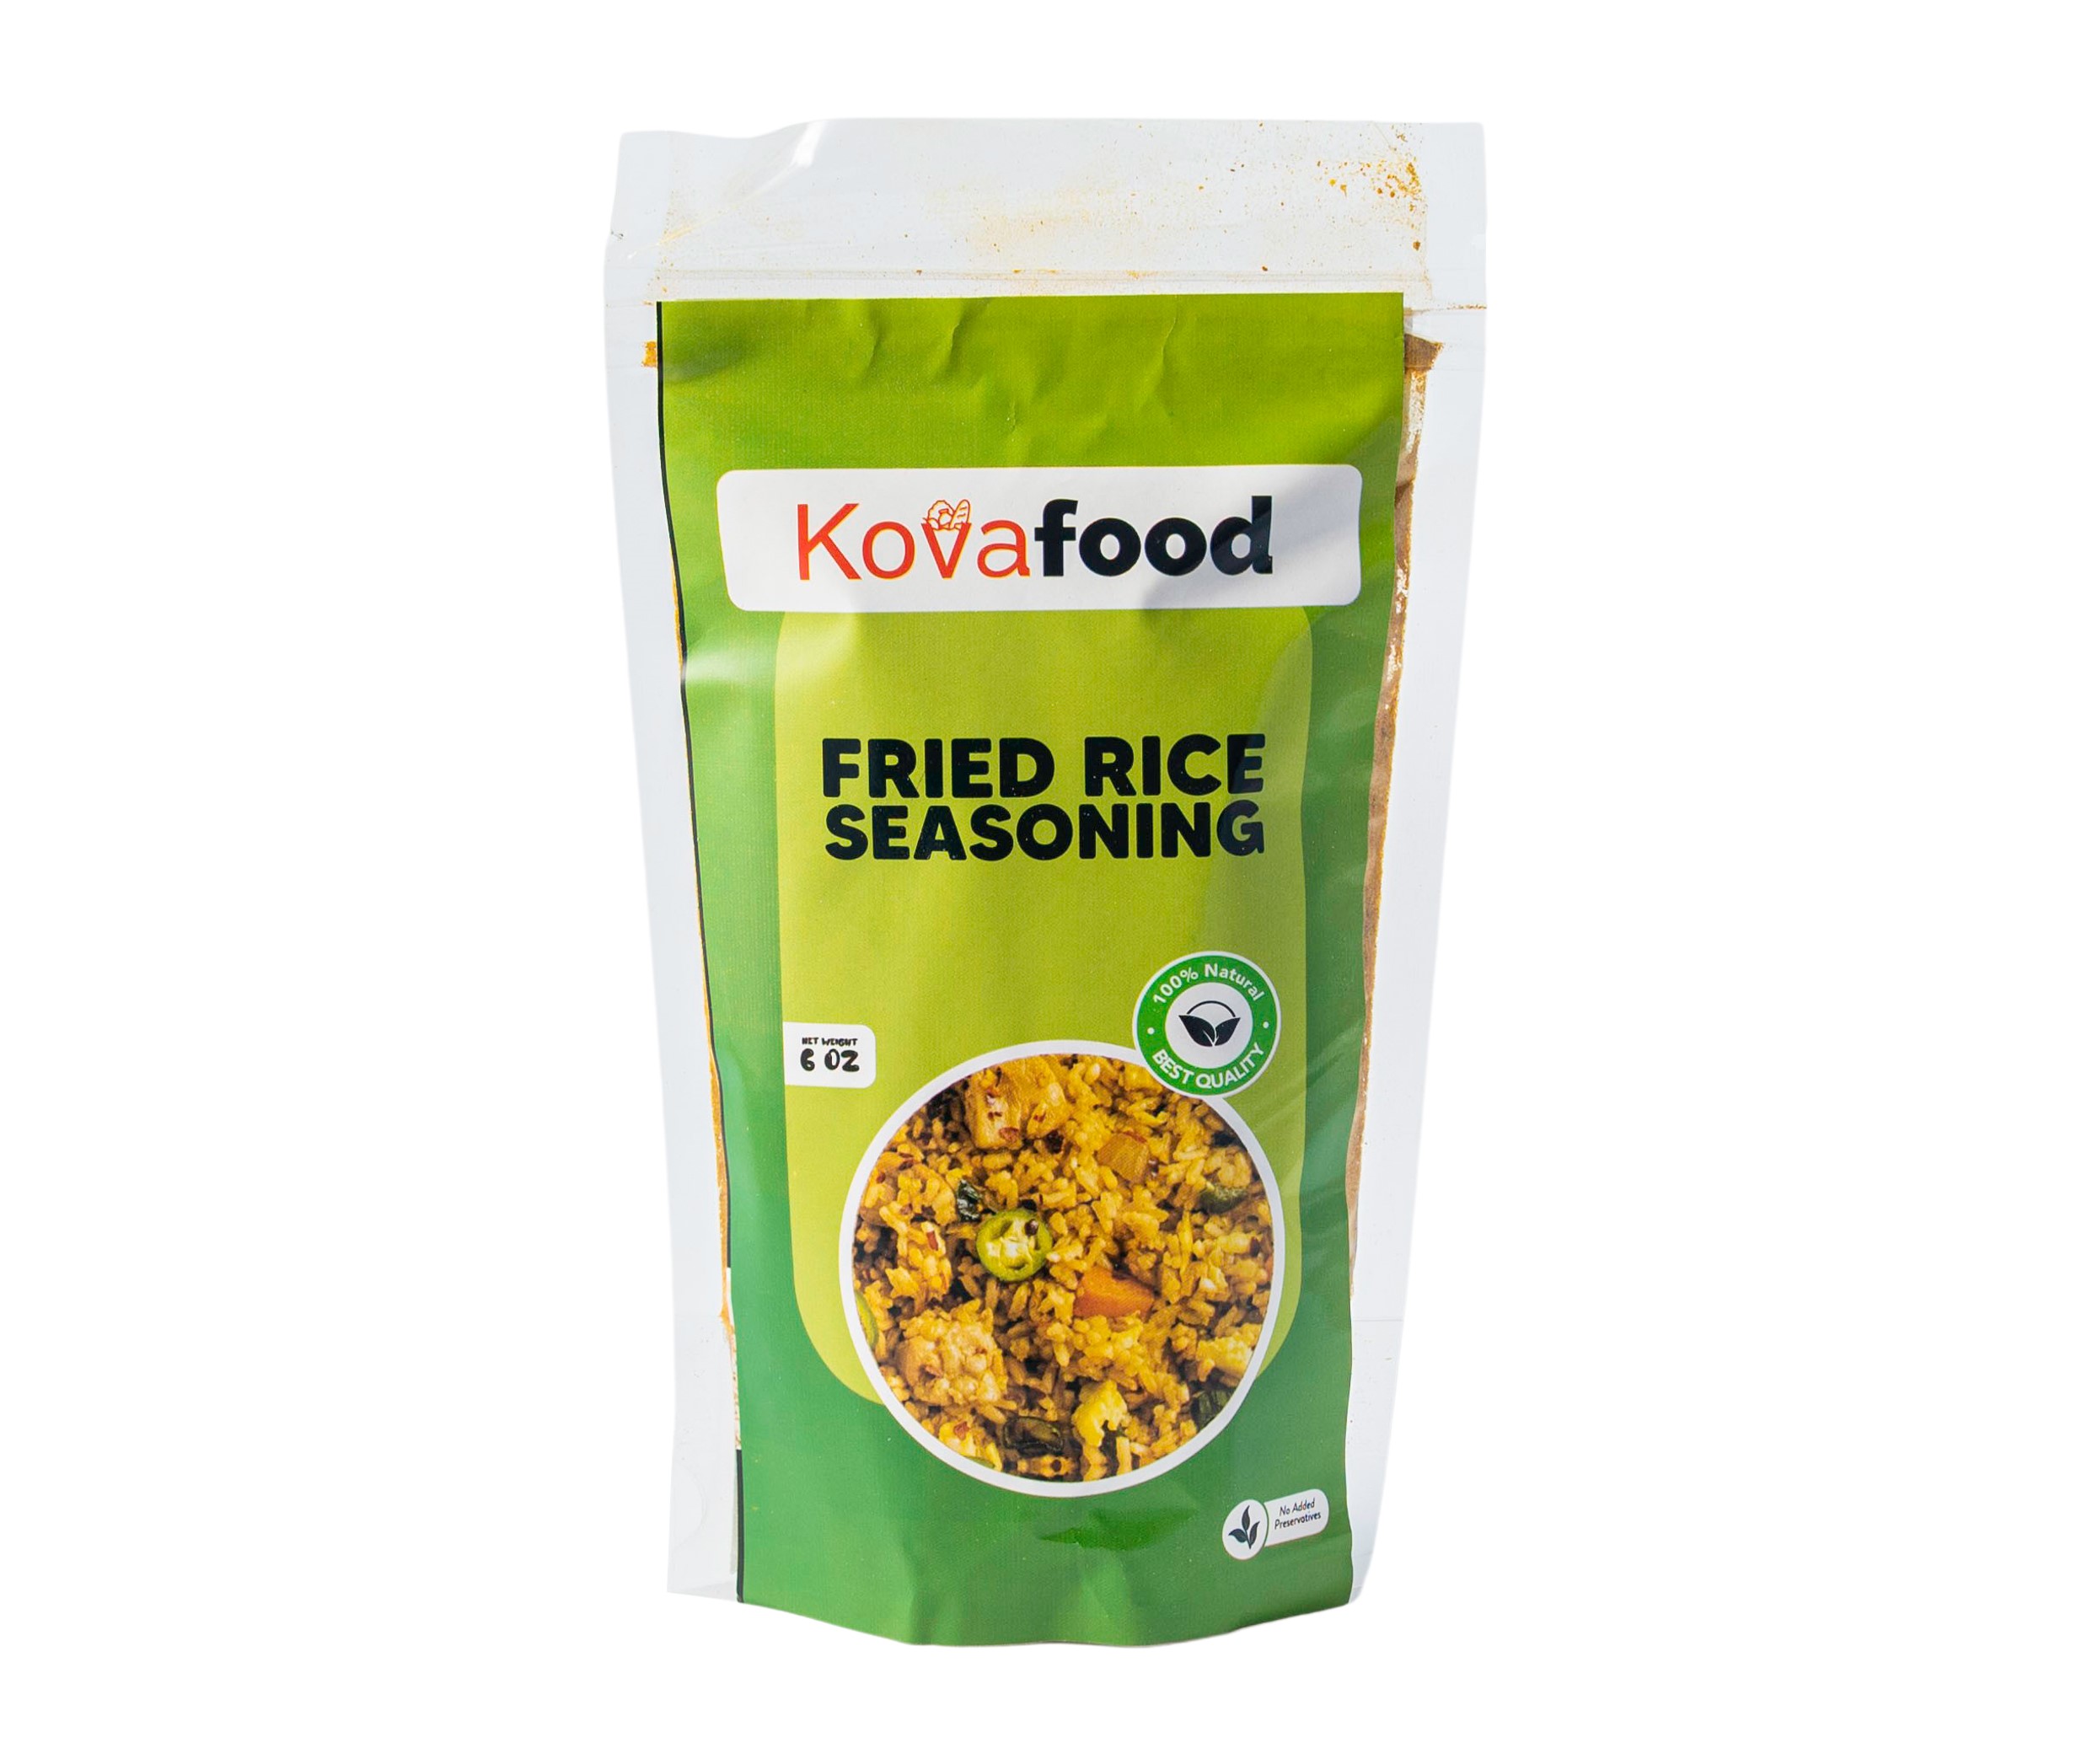 https://storage.googleapis.com/kovafood-ee110.appspot.com/uploads/kova-products/382/new_fried_rice_seasoning.jpeg